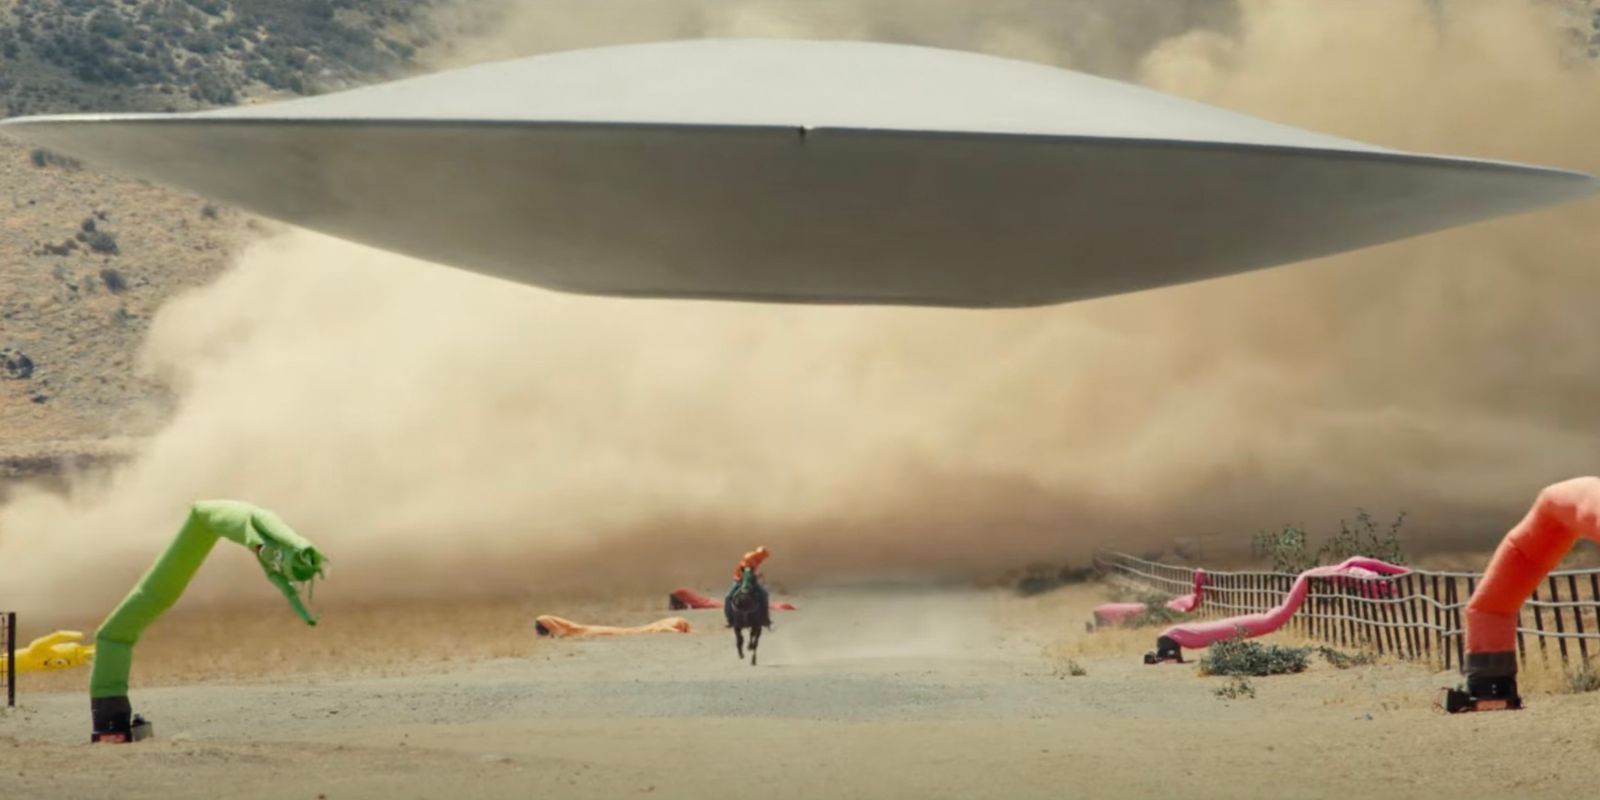 The UFO chasing Daniel Kaluuya in Nope